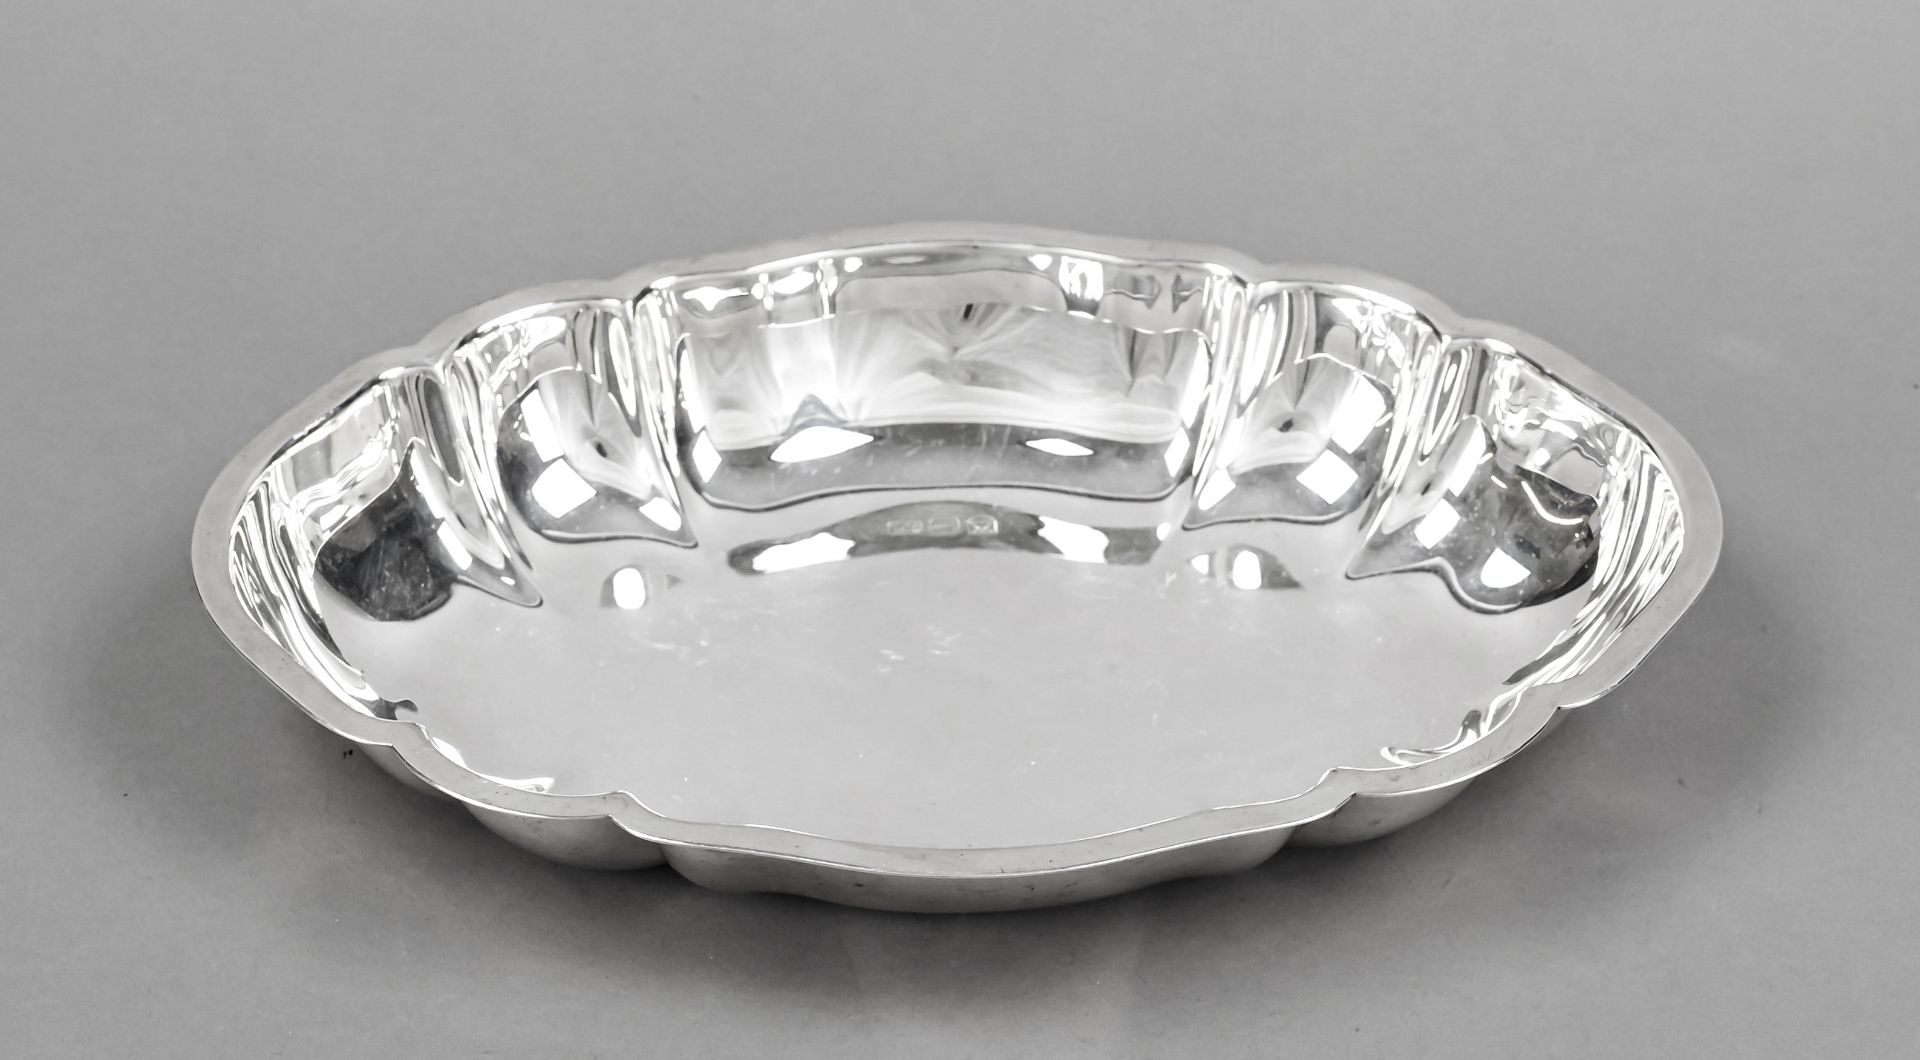 Oval bowl, German, 20th century, maker's mark M. H. Wilkens & Söhne, Bremen-Hemelingen, sterling